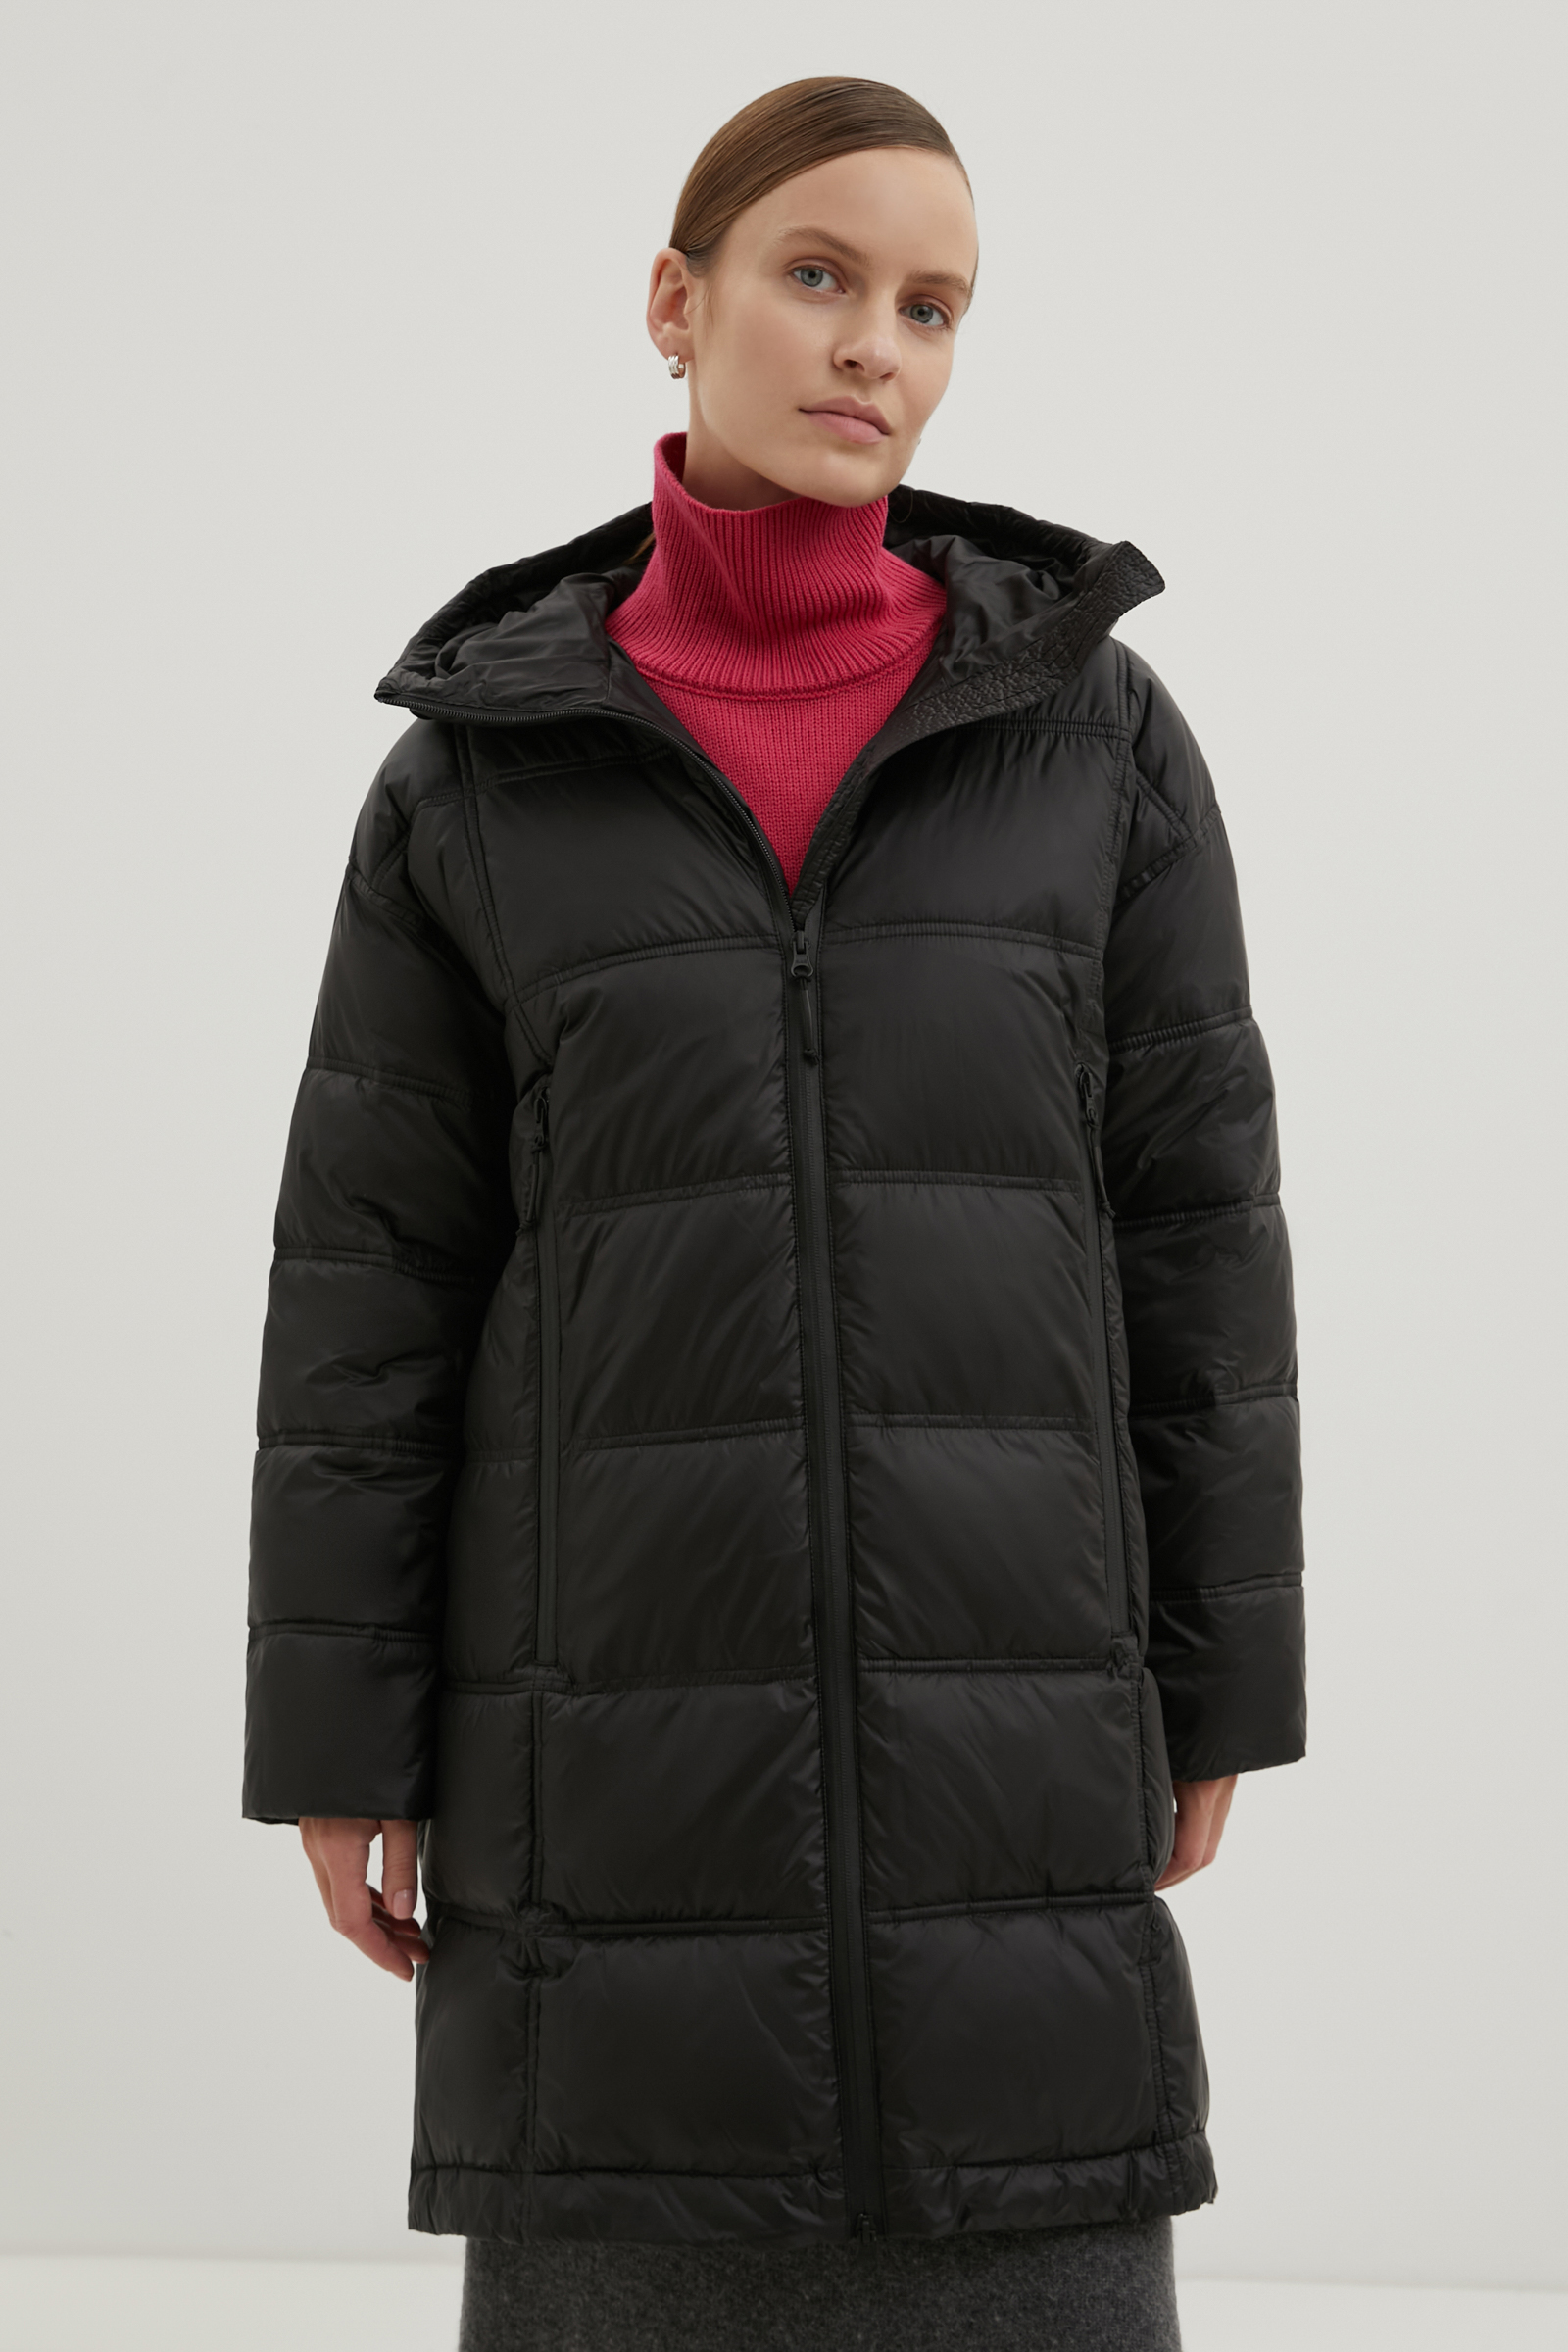 Пальто женское Finn-Flare FWD11047 черное XL